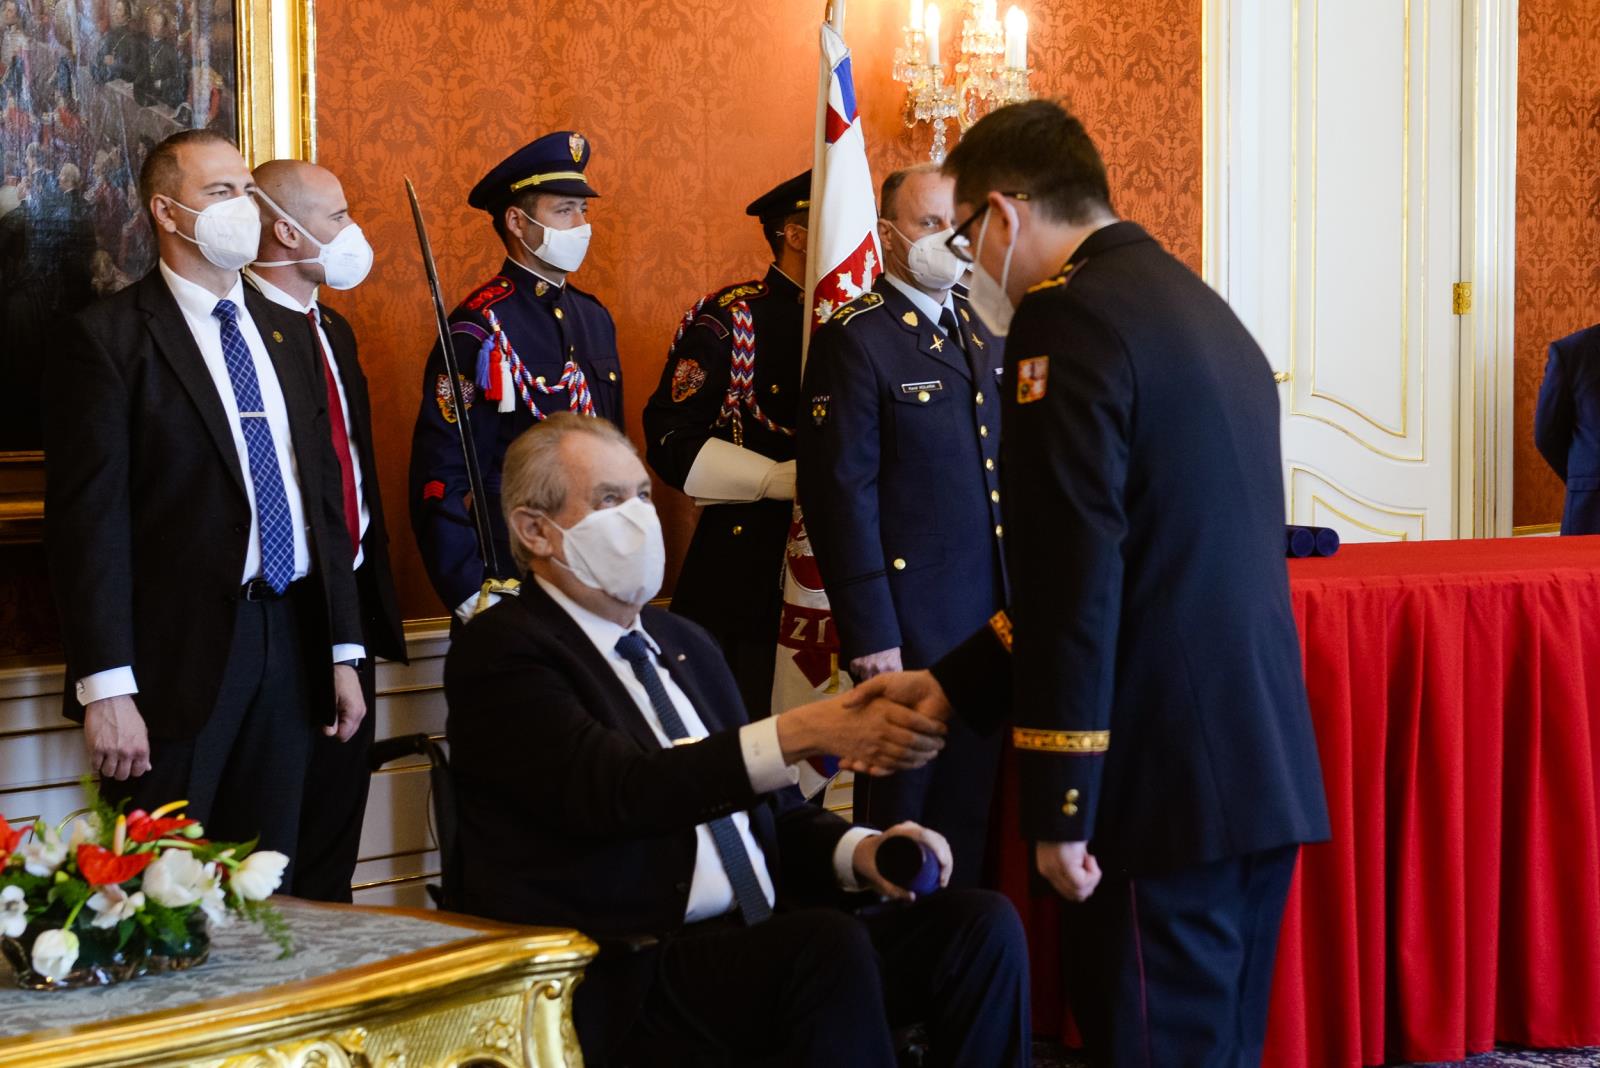 16_brig. gen. Ing. Daniel Miklós, MPA si podává ruku s prezidentem Milošem Zemanem.jpg